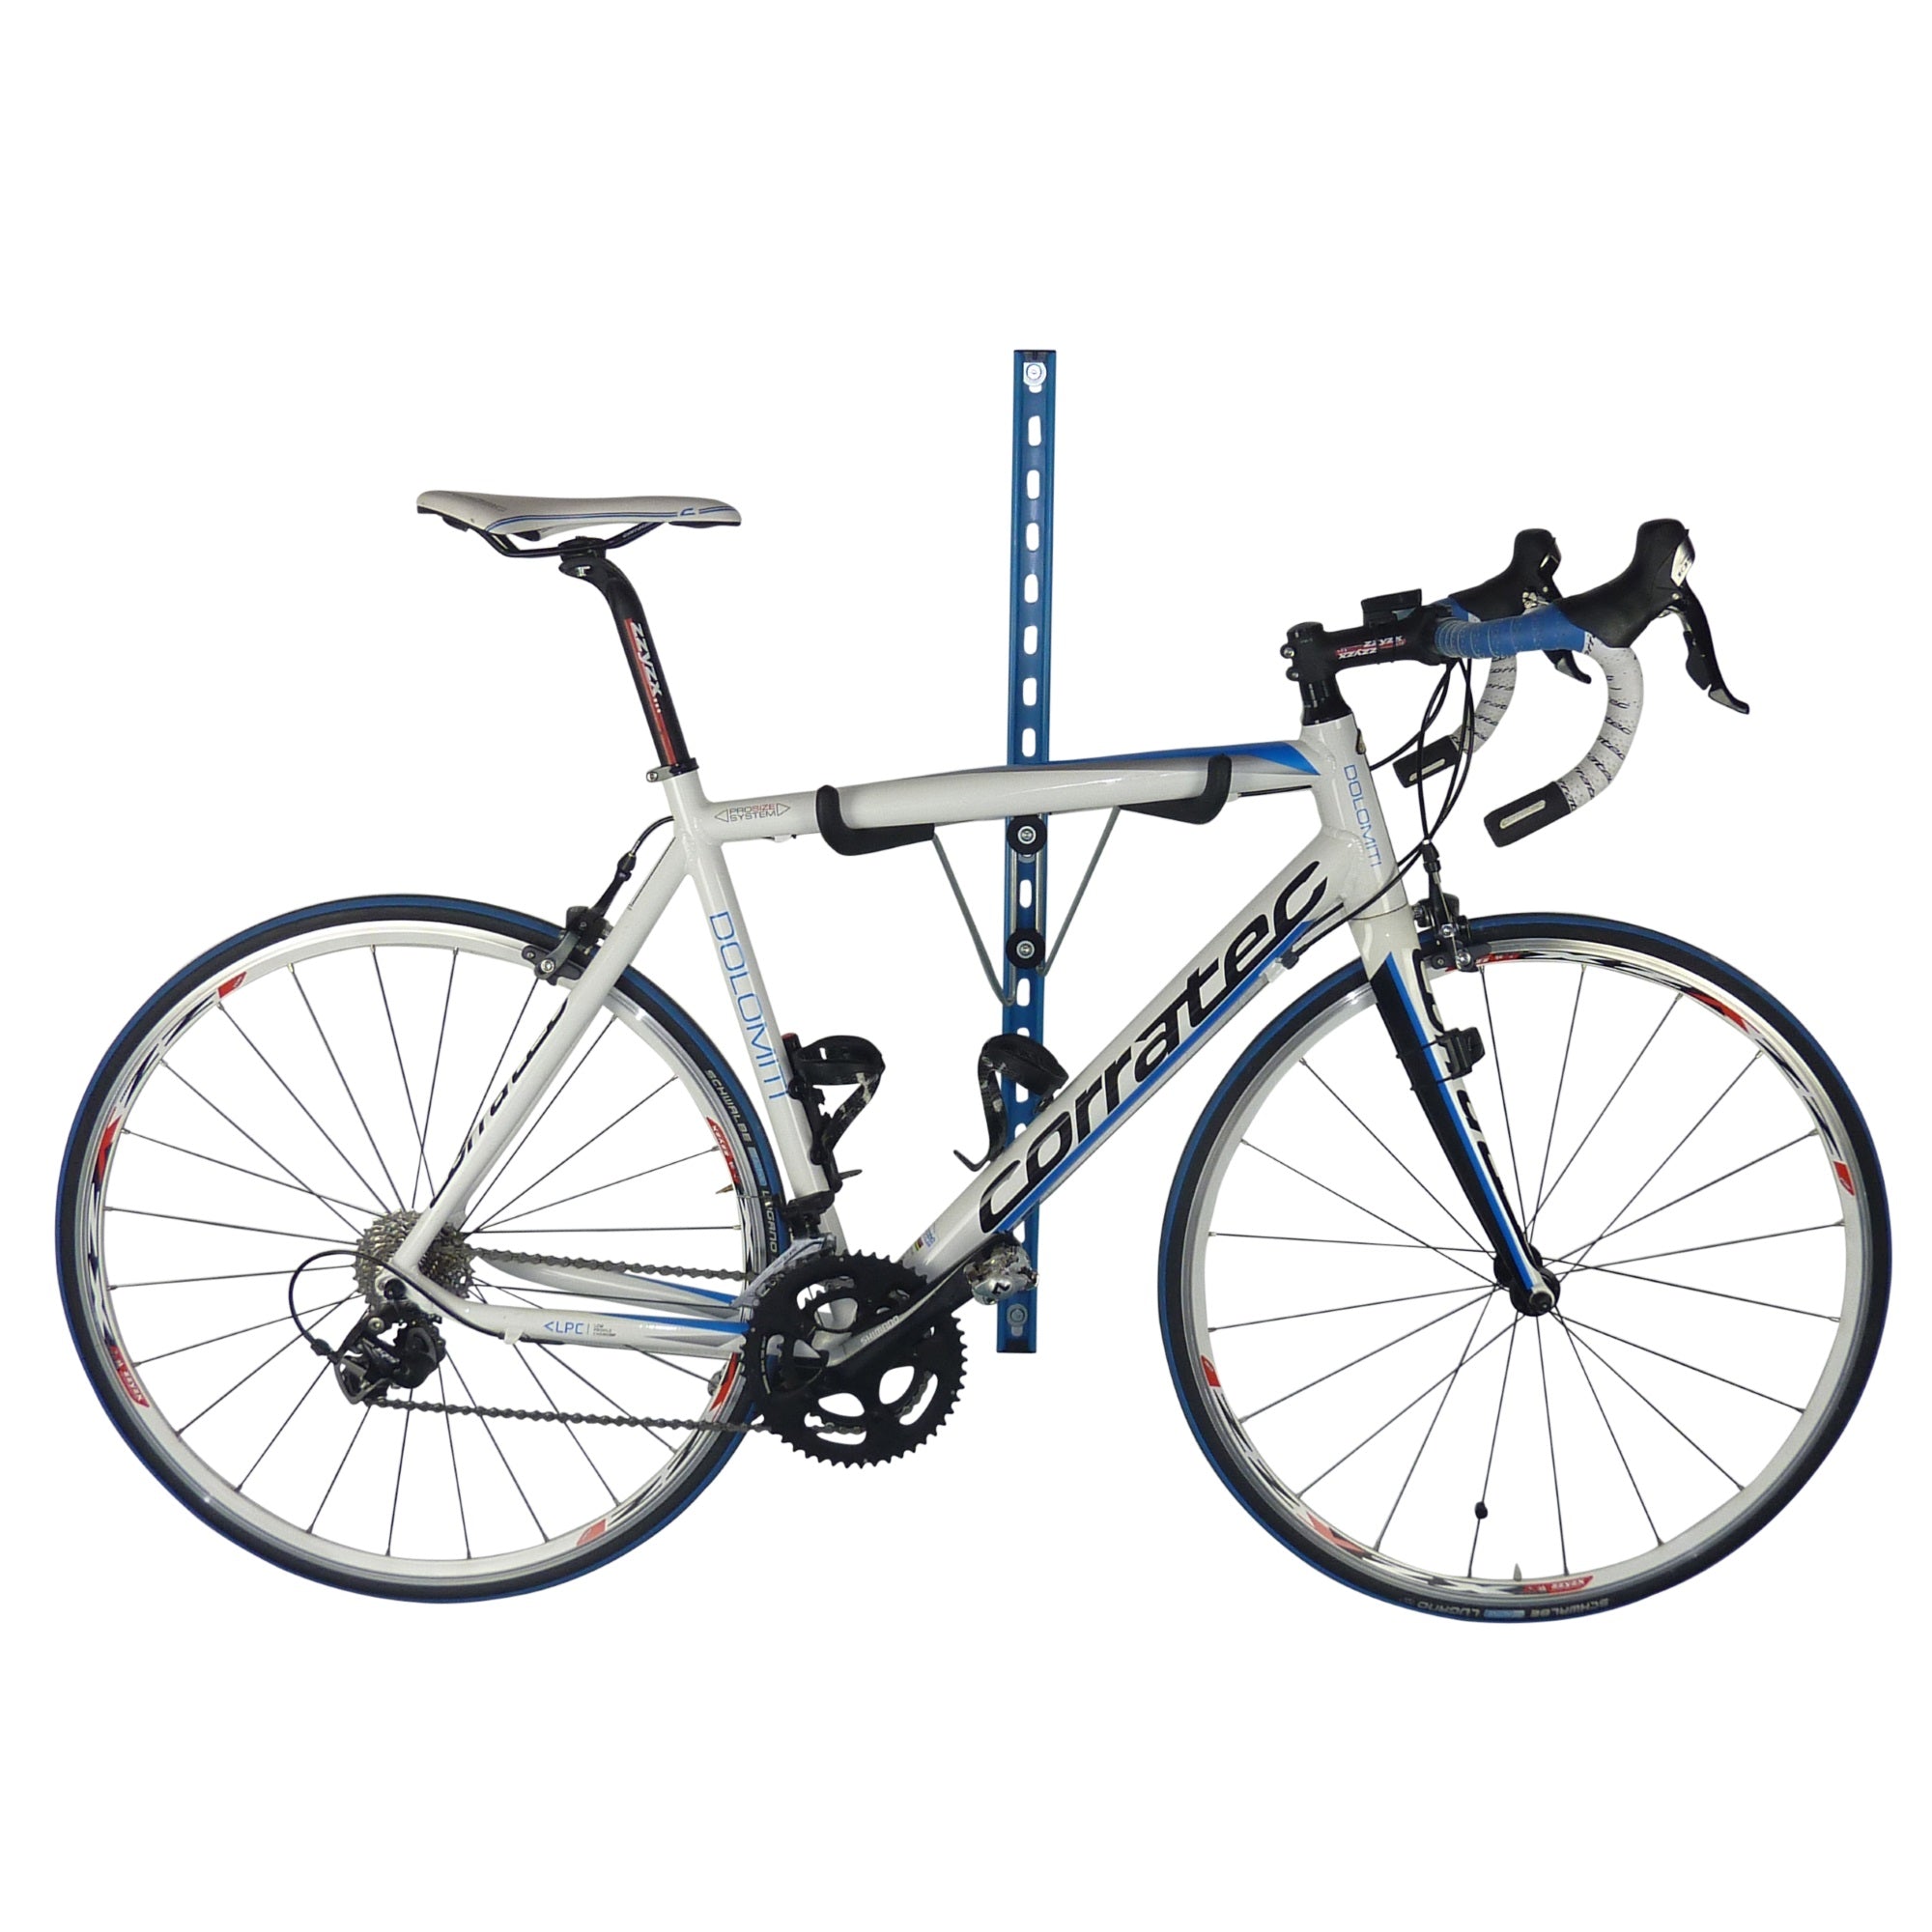 Folding Road Bike Wall Brackets, Gear Storage, & Work Stand